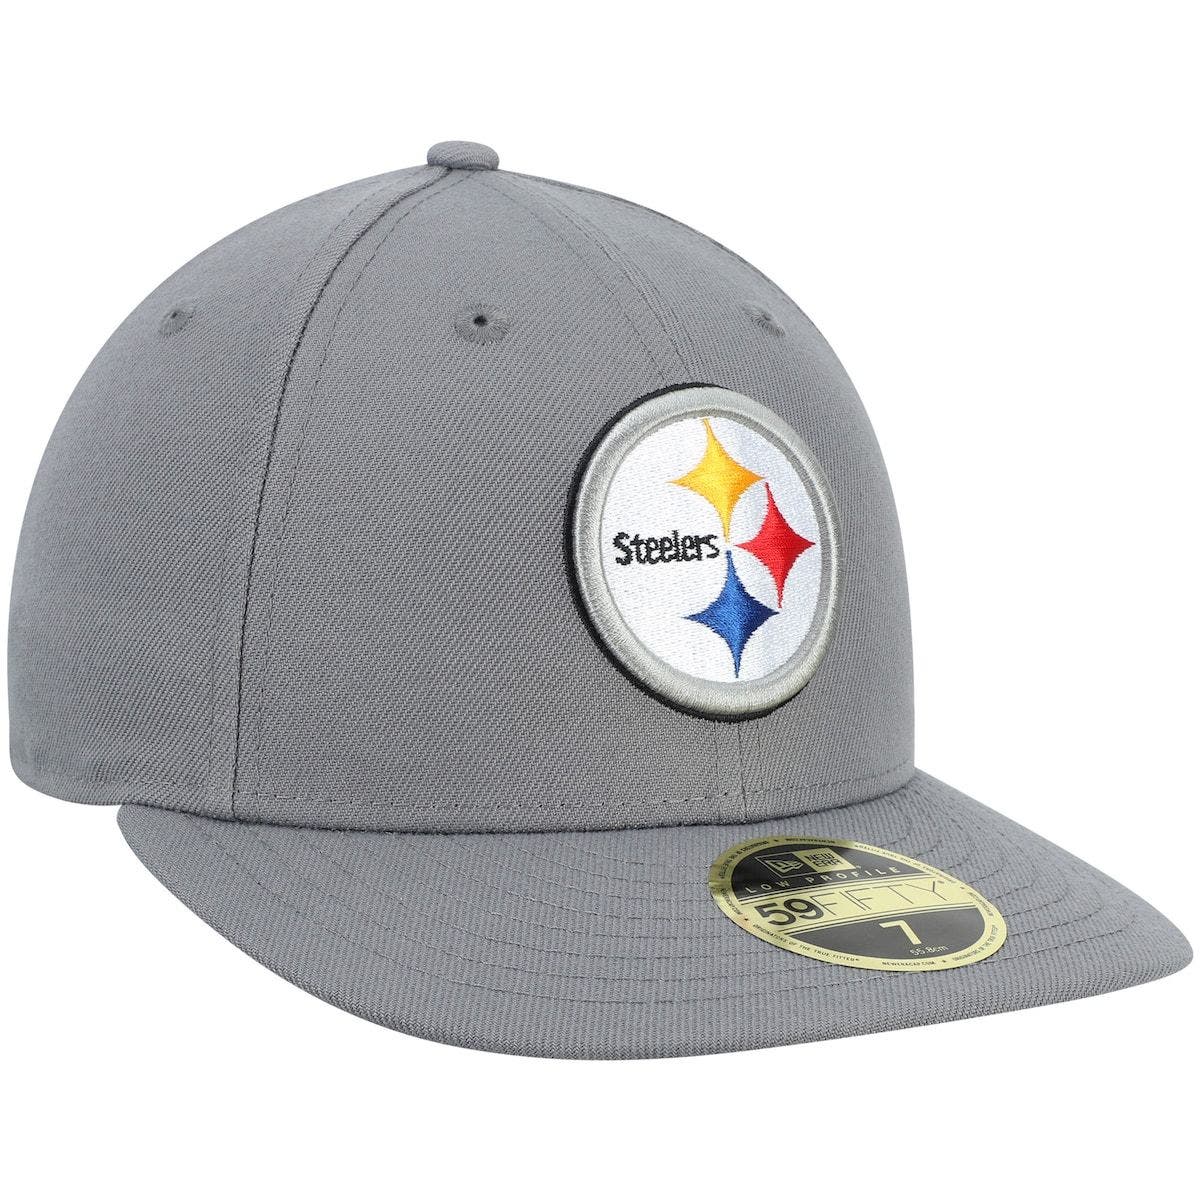 GRAPHITE Pittsburgh Steelers New Era 59Fifty Cap 